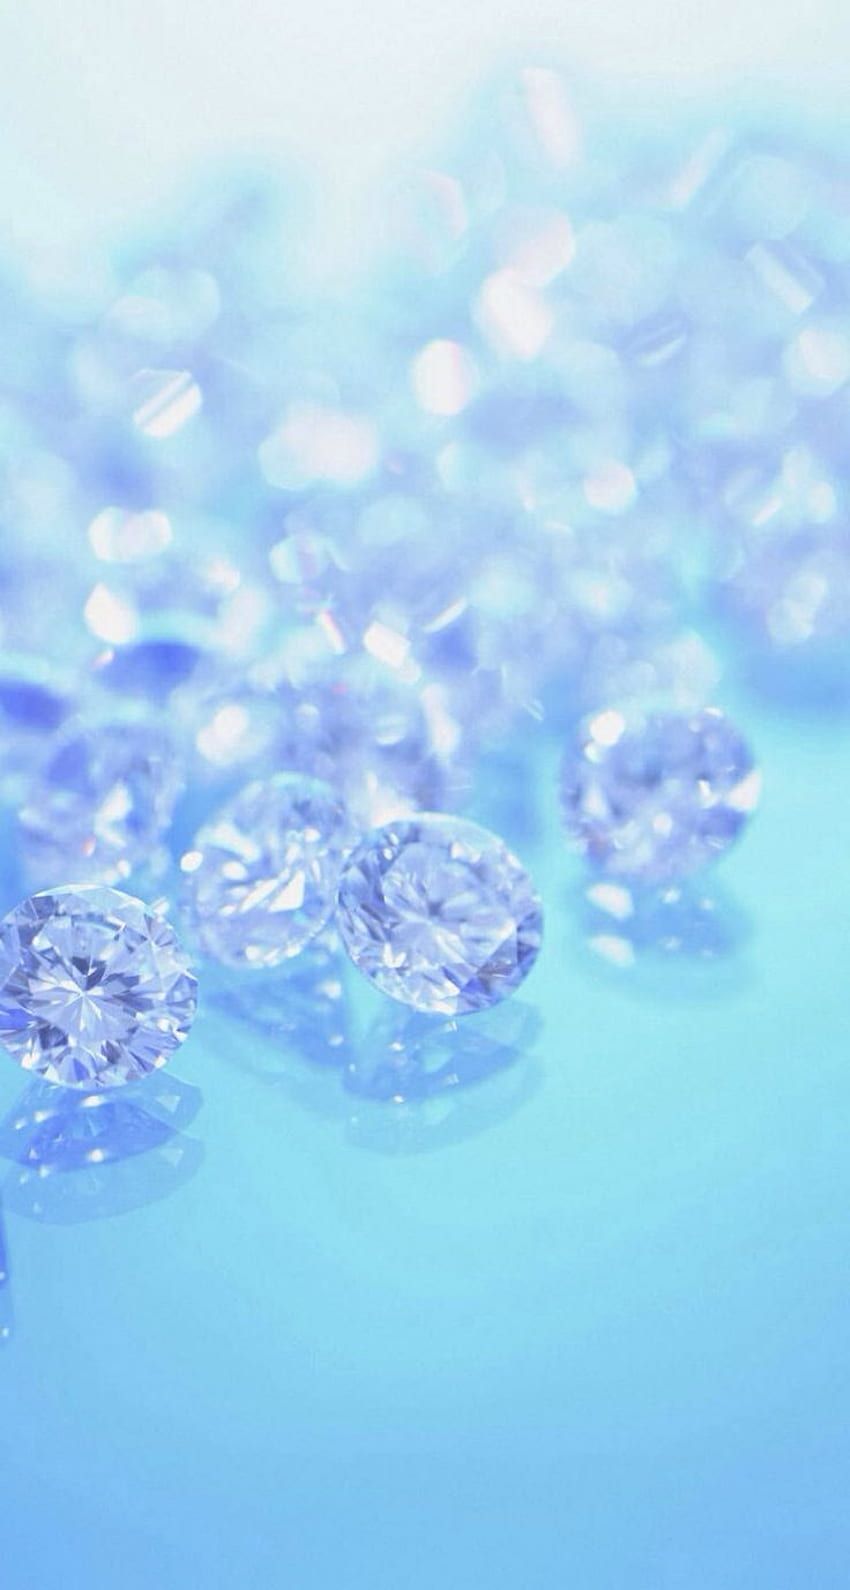 A lot of diamonds on a blue background - Diamond